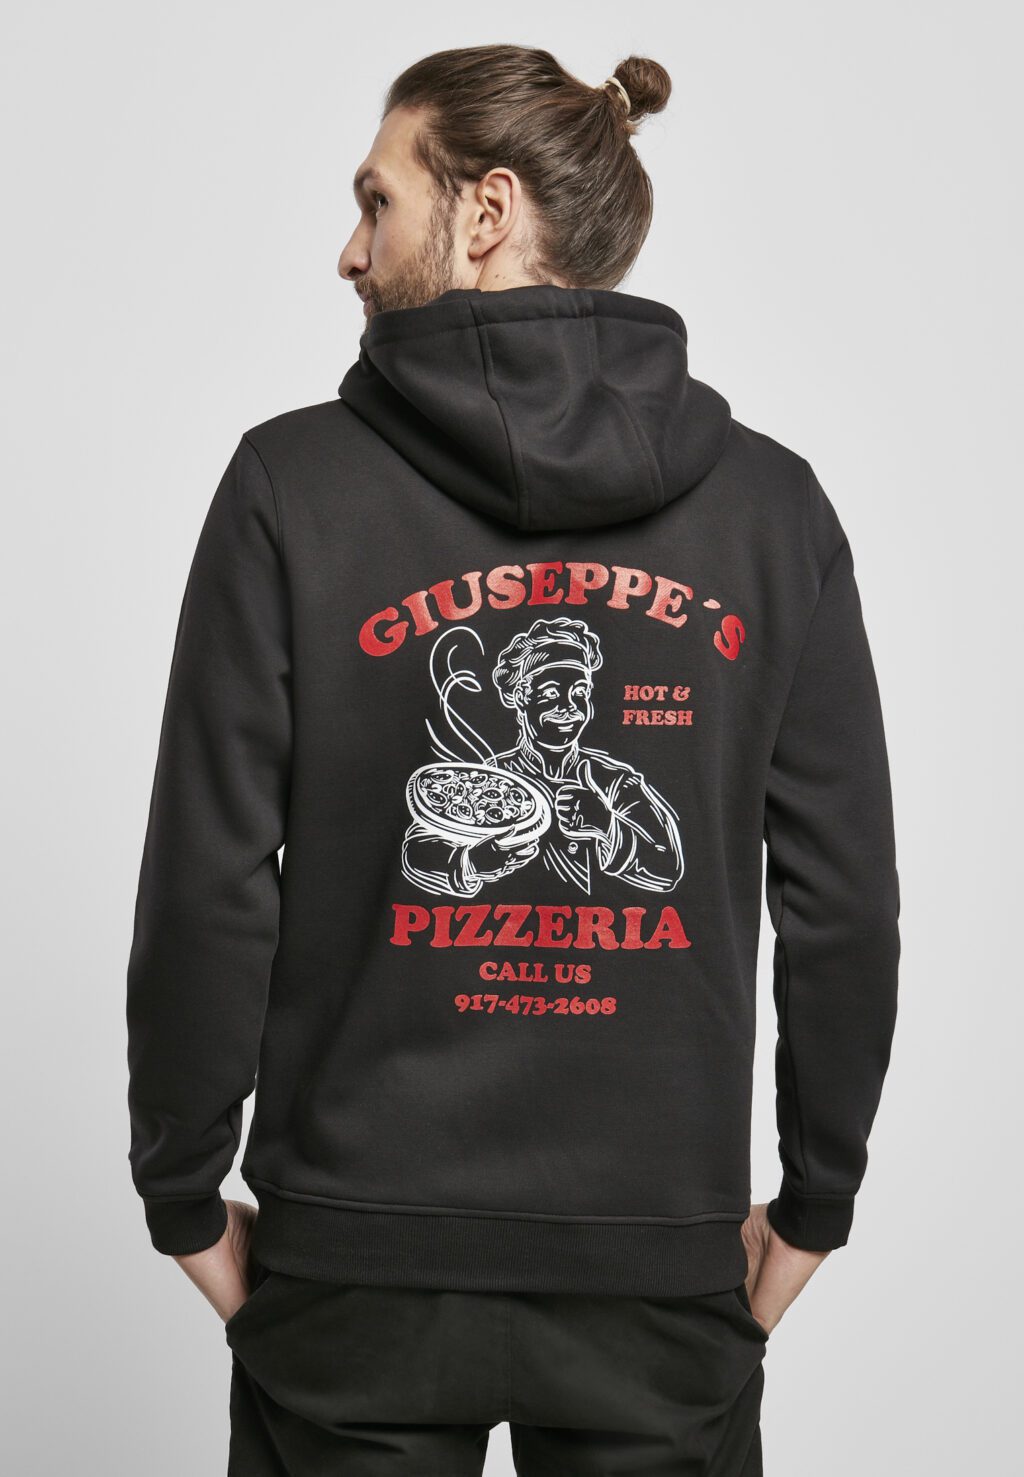 Giuseppe's Pizzeria Hoody black MT1471